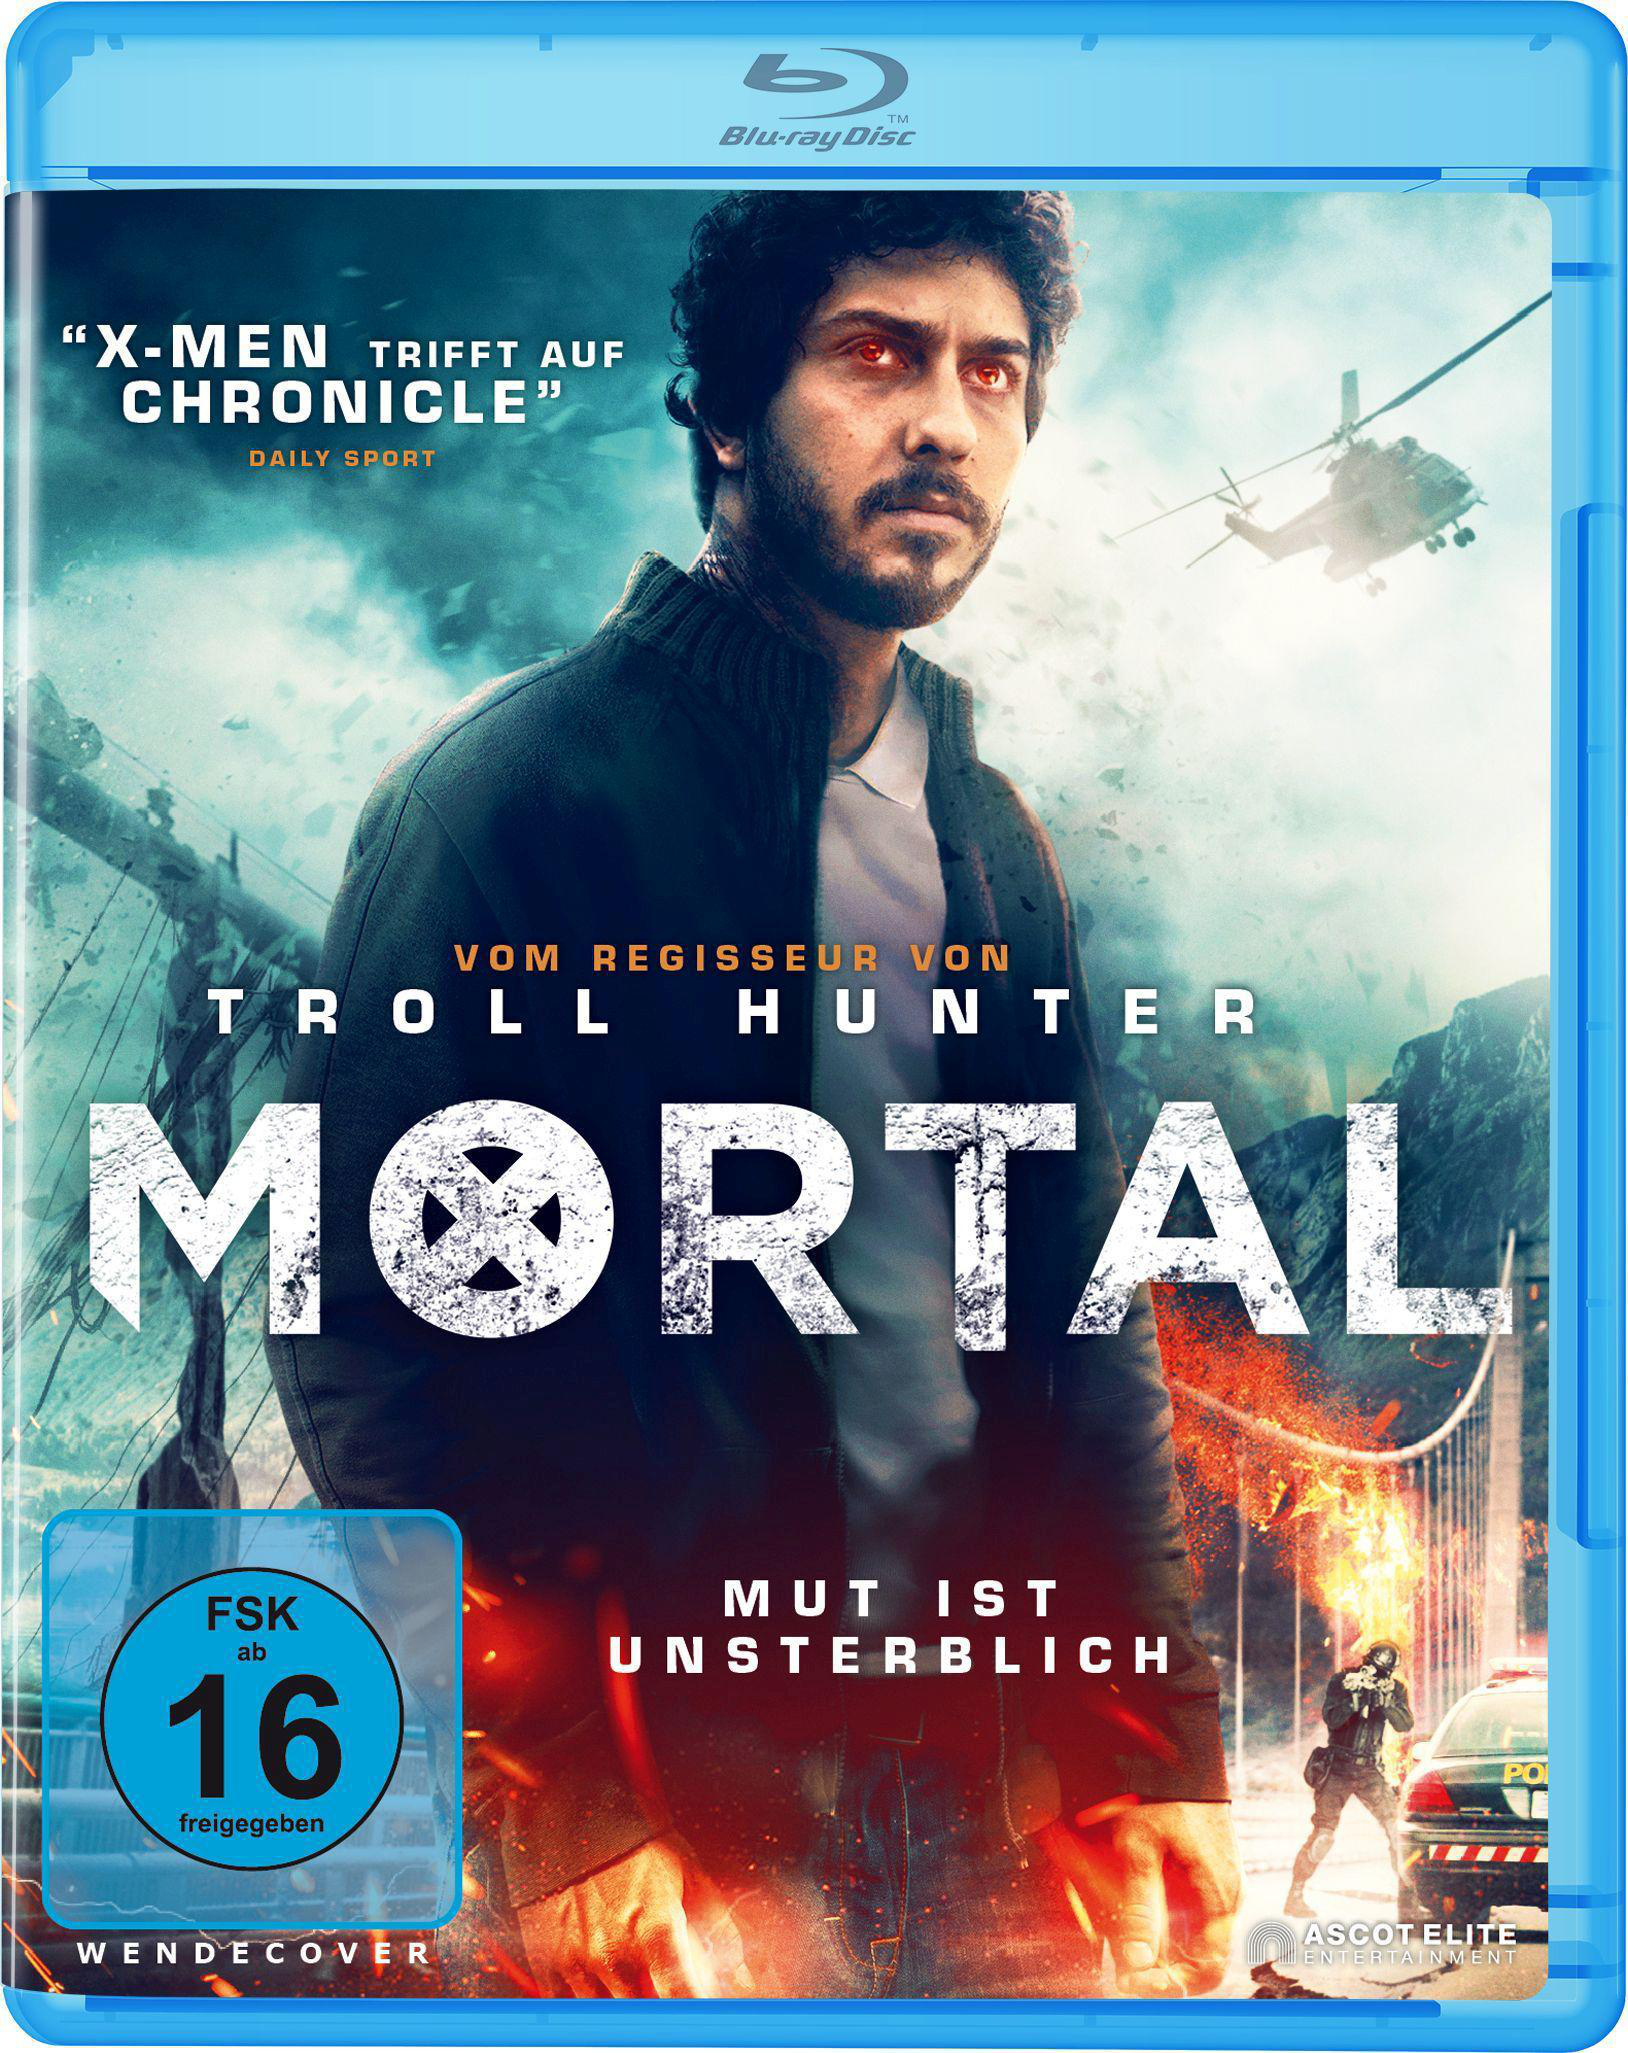 Mortal Blu-ray - ist unsterblich Mut